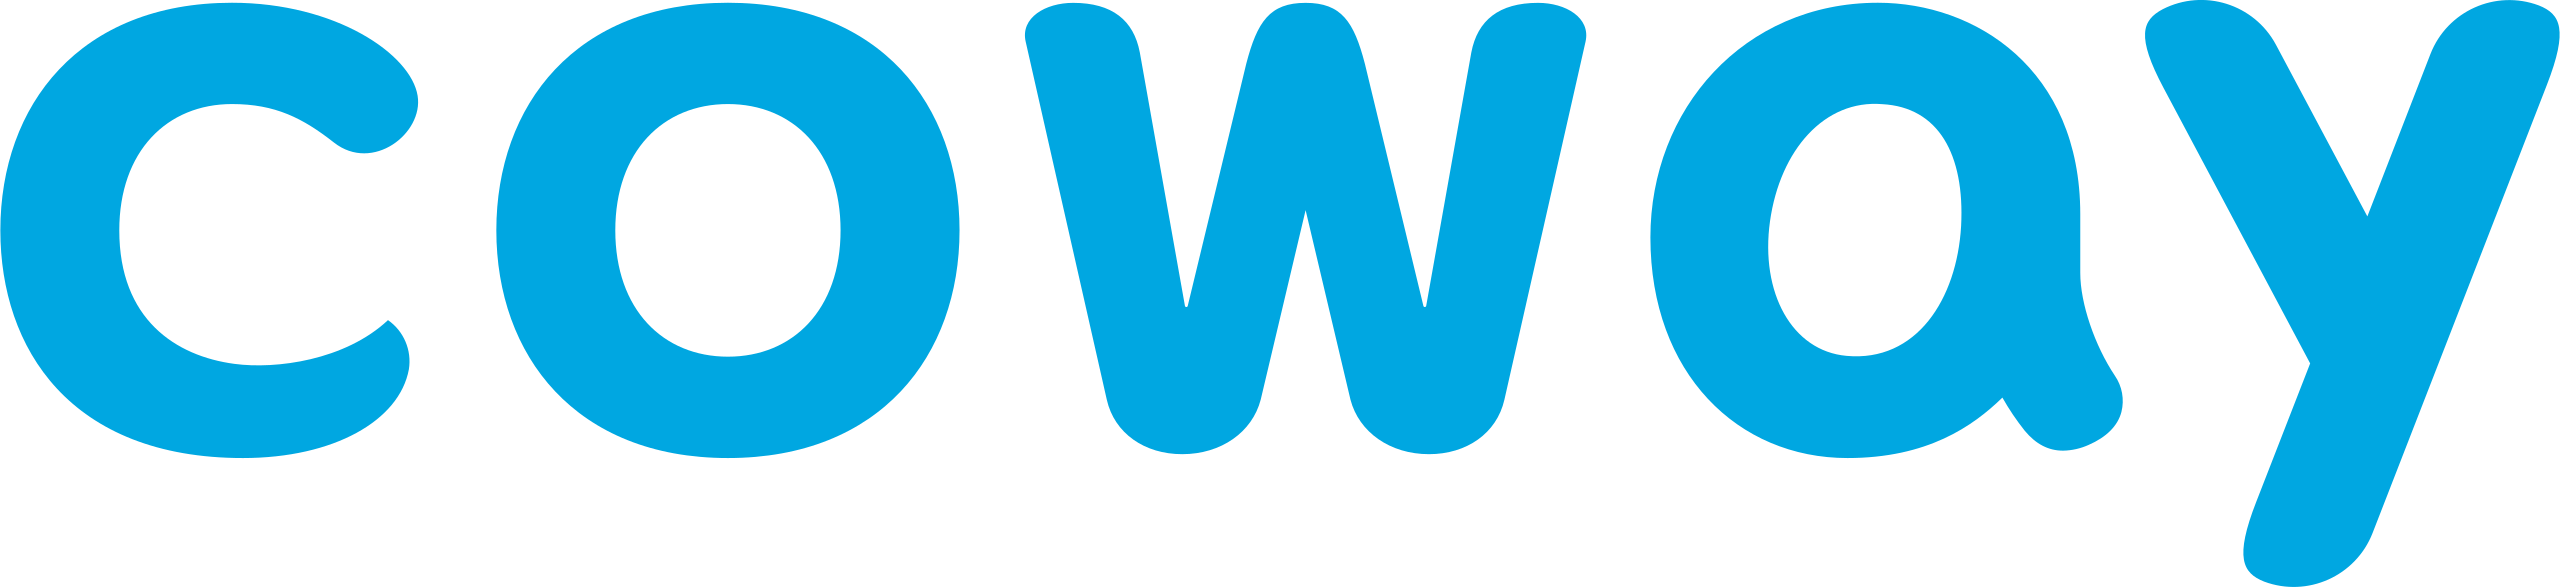 04.coway_logo